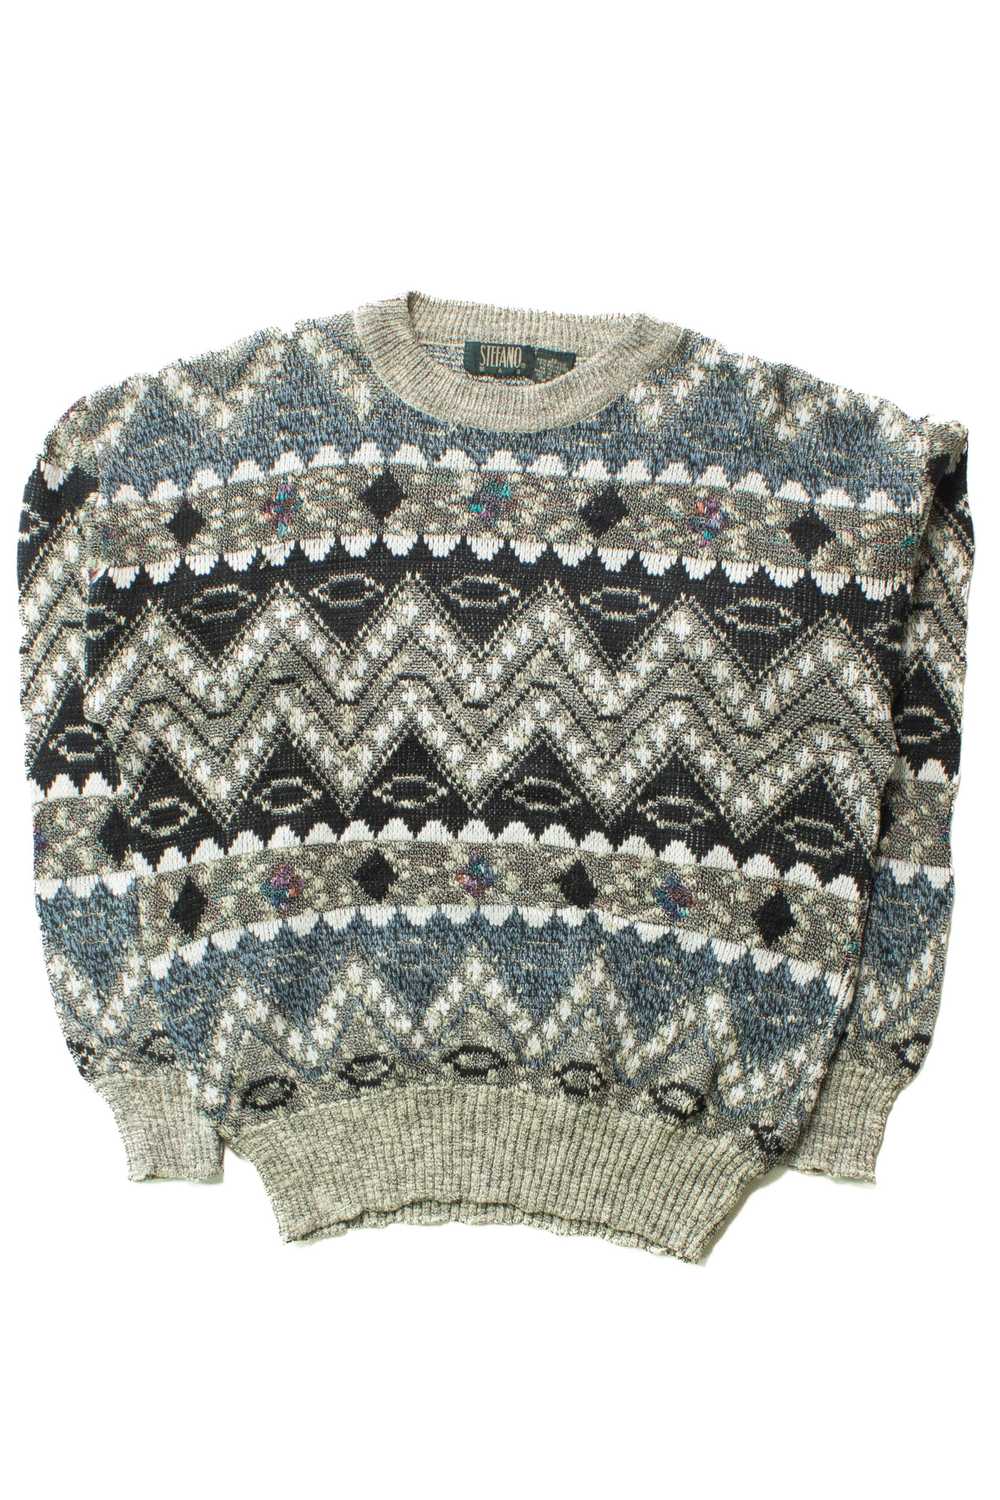 Vintage Stefano 80s Sweater 4441 - image 1